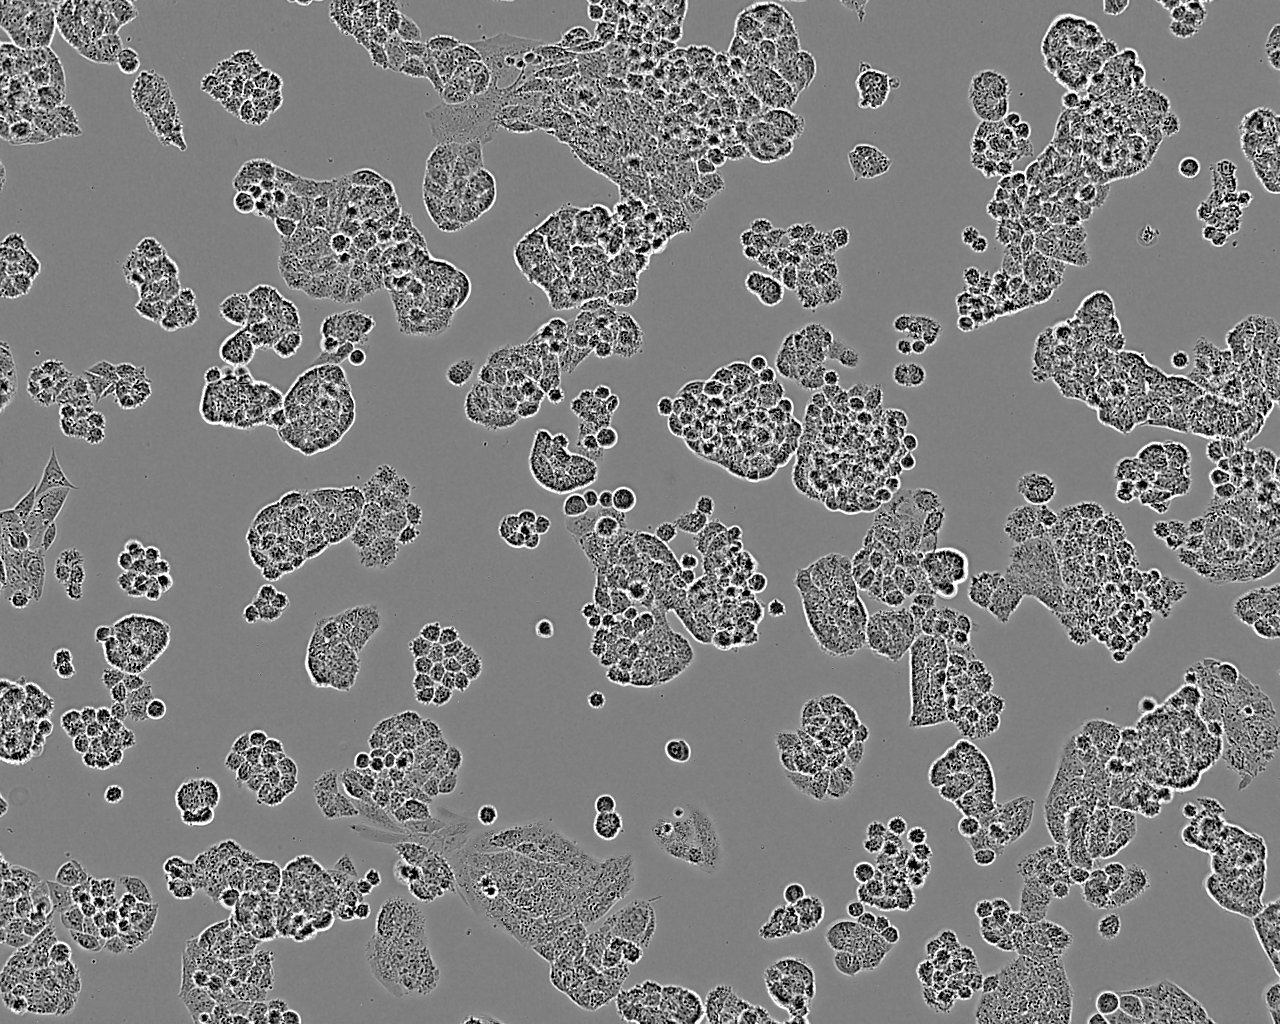 NCI-H841 Cells|人小细胞肺癌细胞系,NCI-H841 Cells